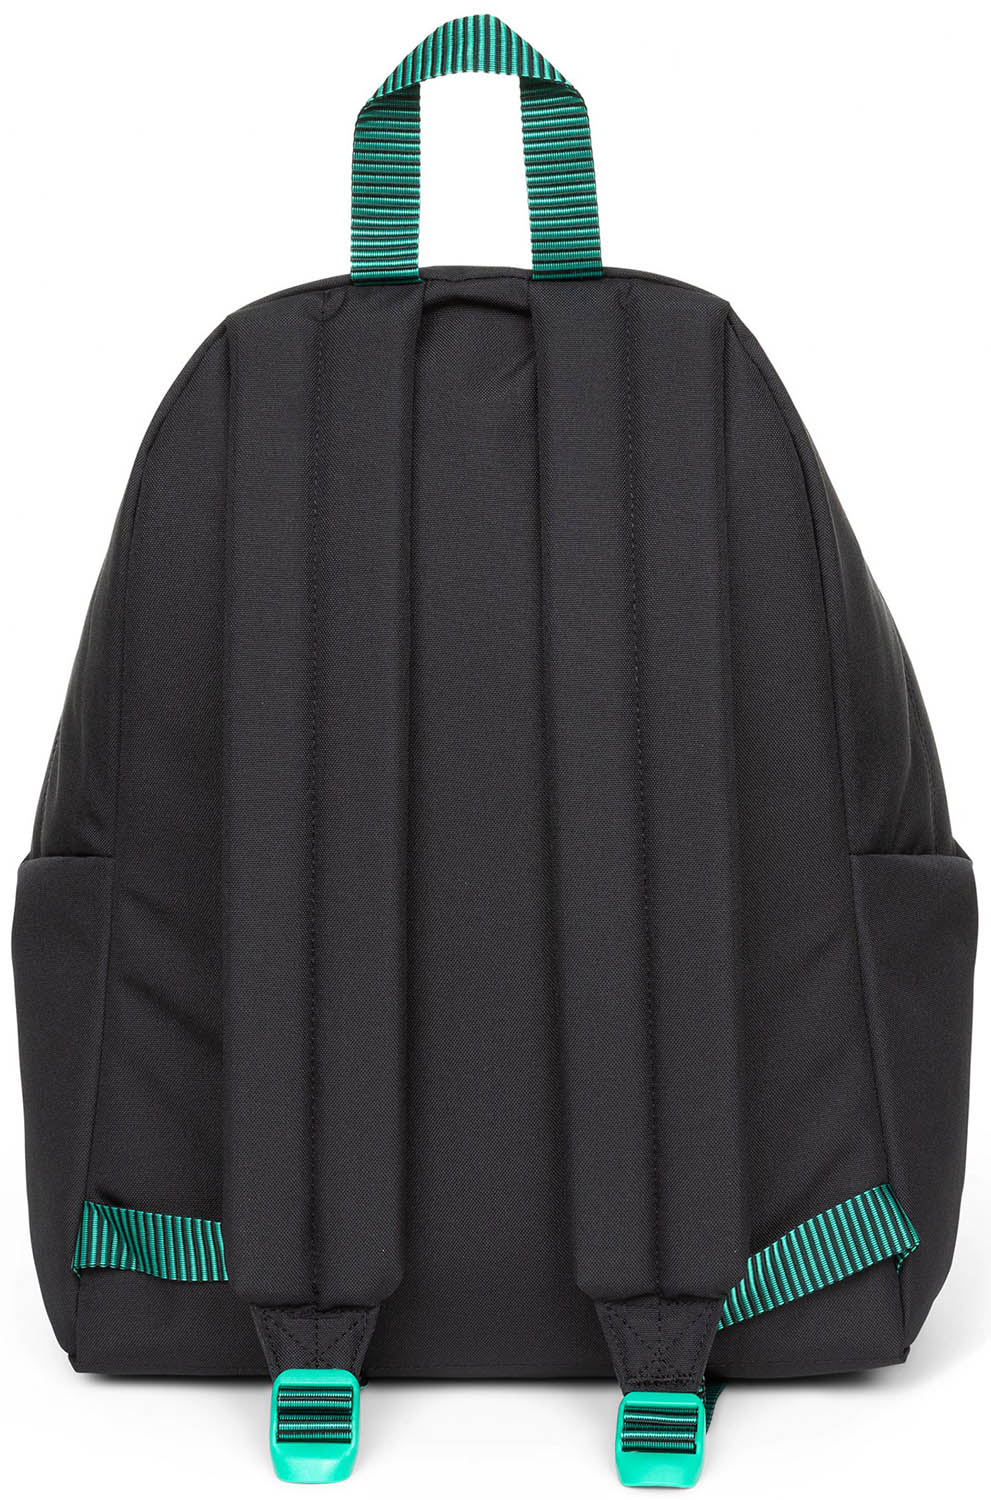 Eastpak Padded Pak'r Backpack - Kontrast Stripe Black